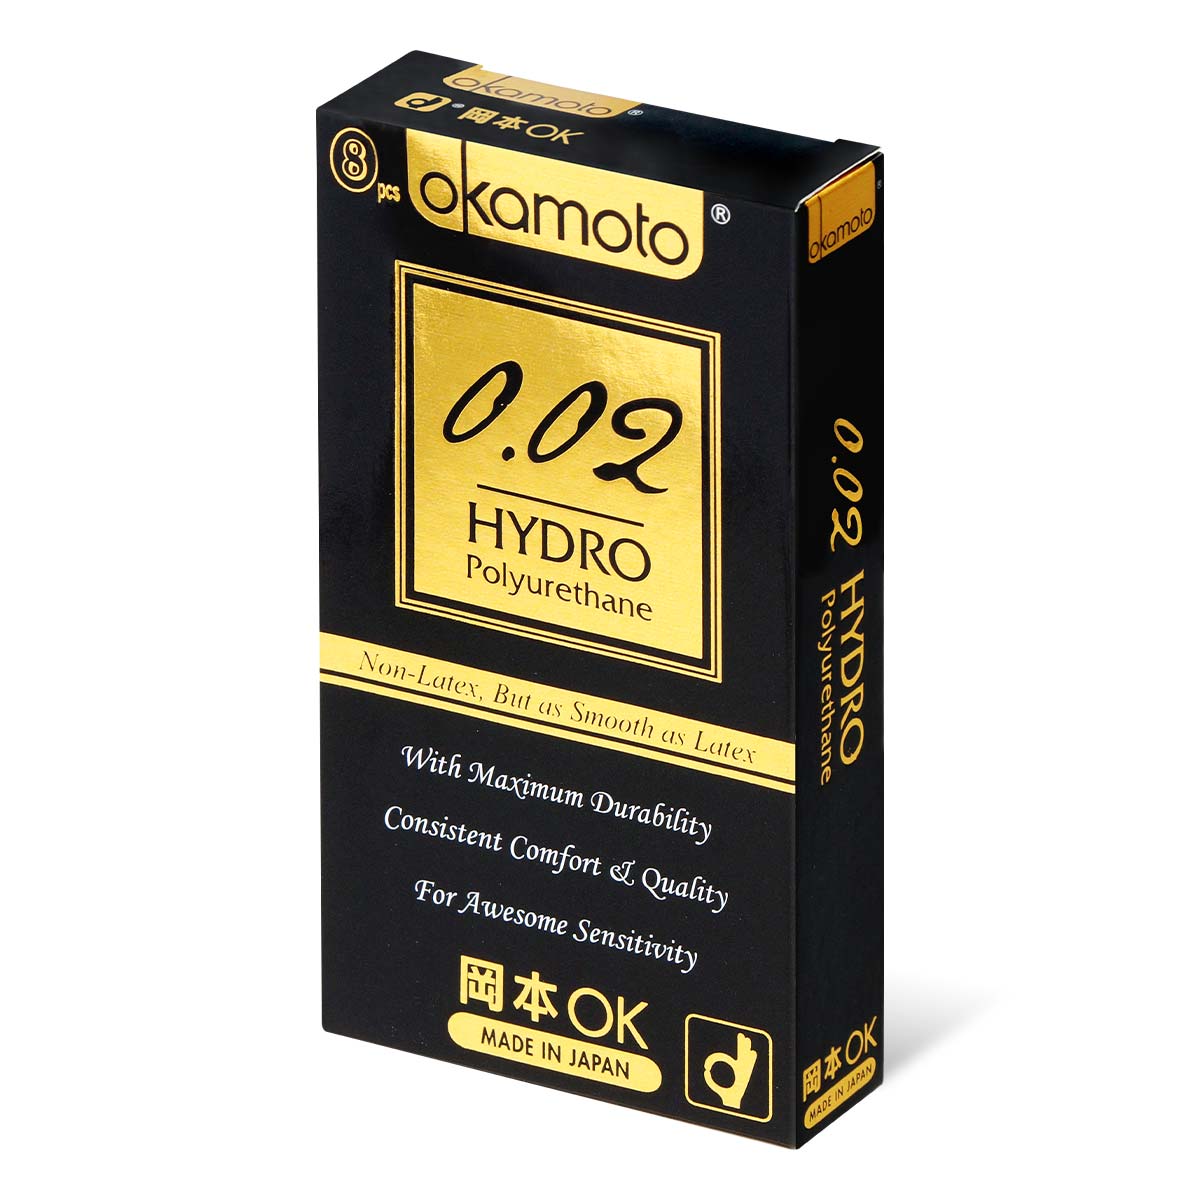 Okamoto 0.02 Hydro Polyurethane Condom 8's Pack PU Condom-p_1